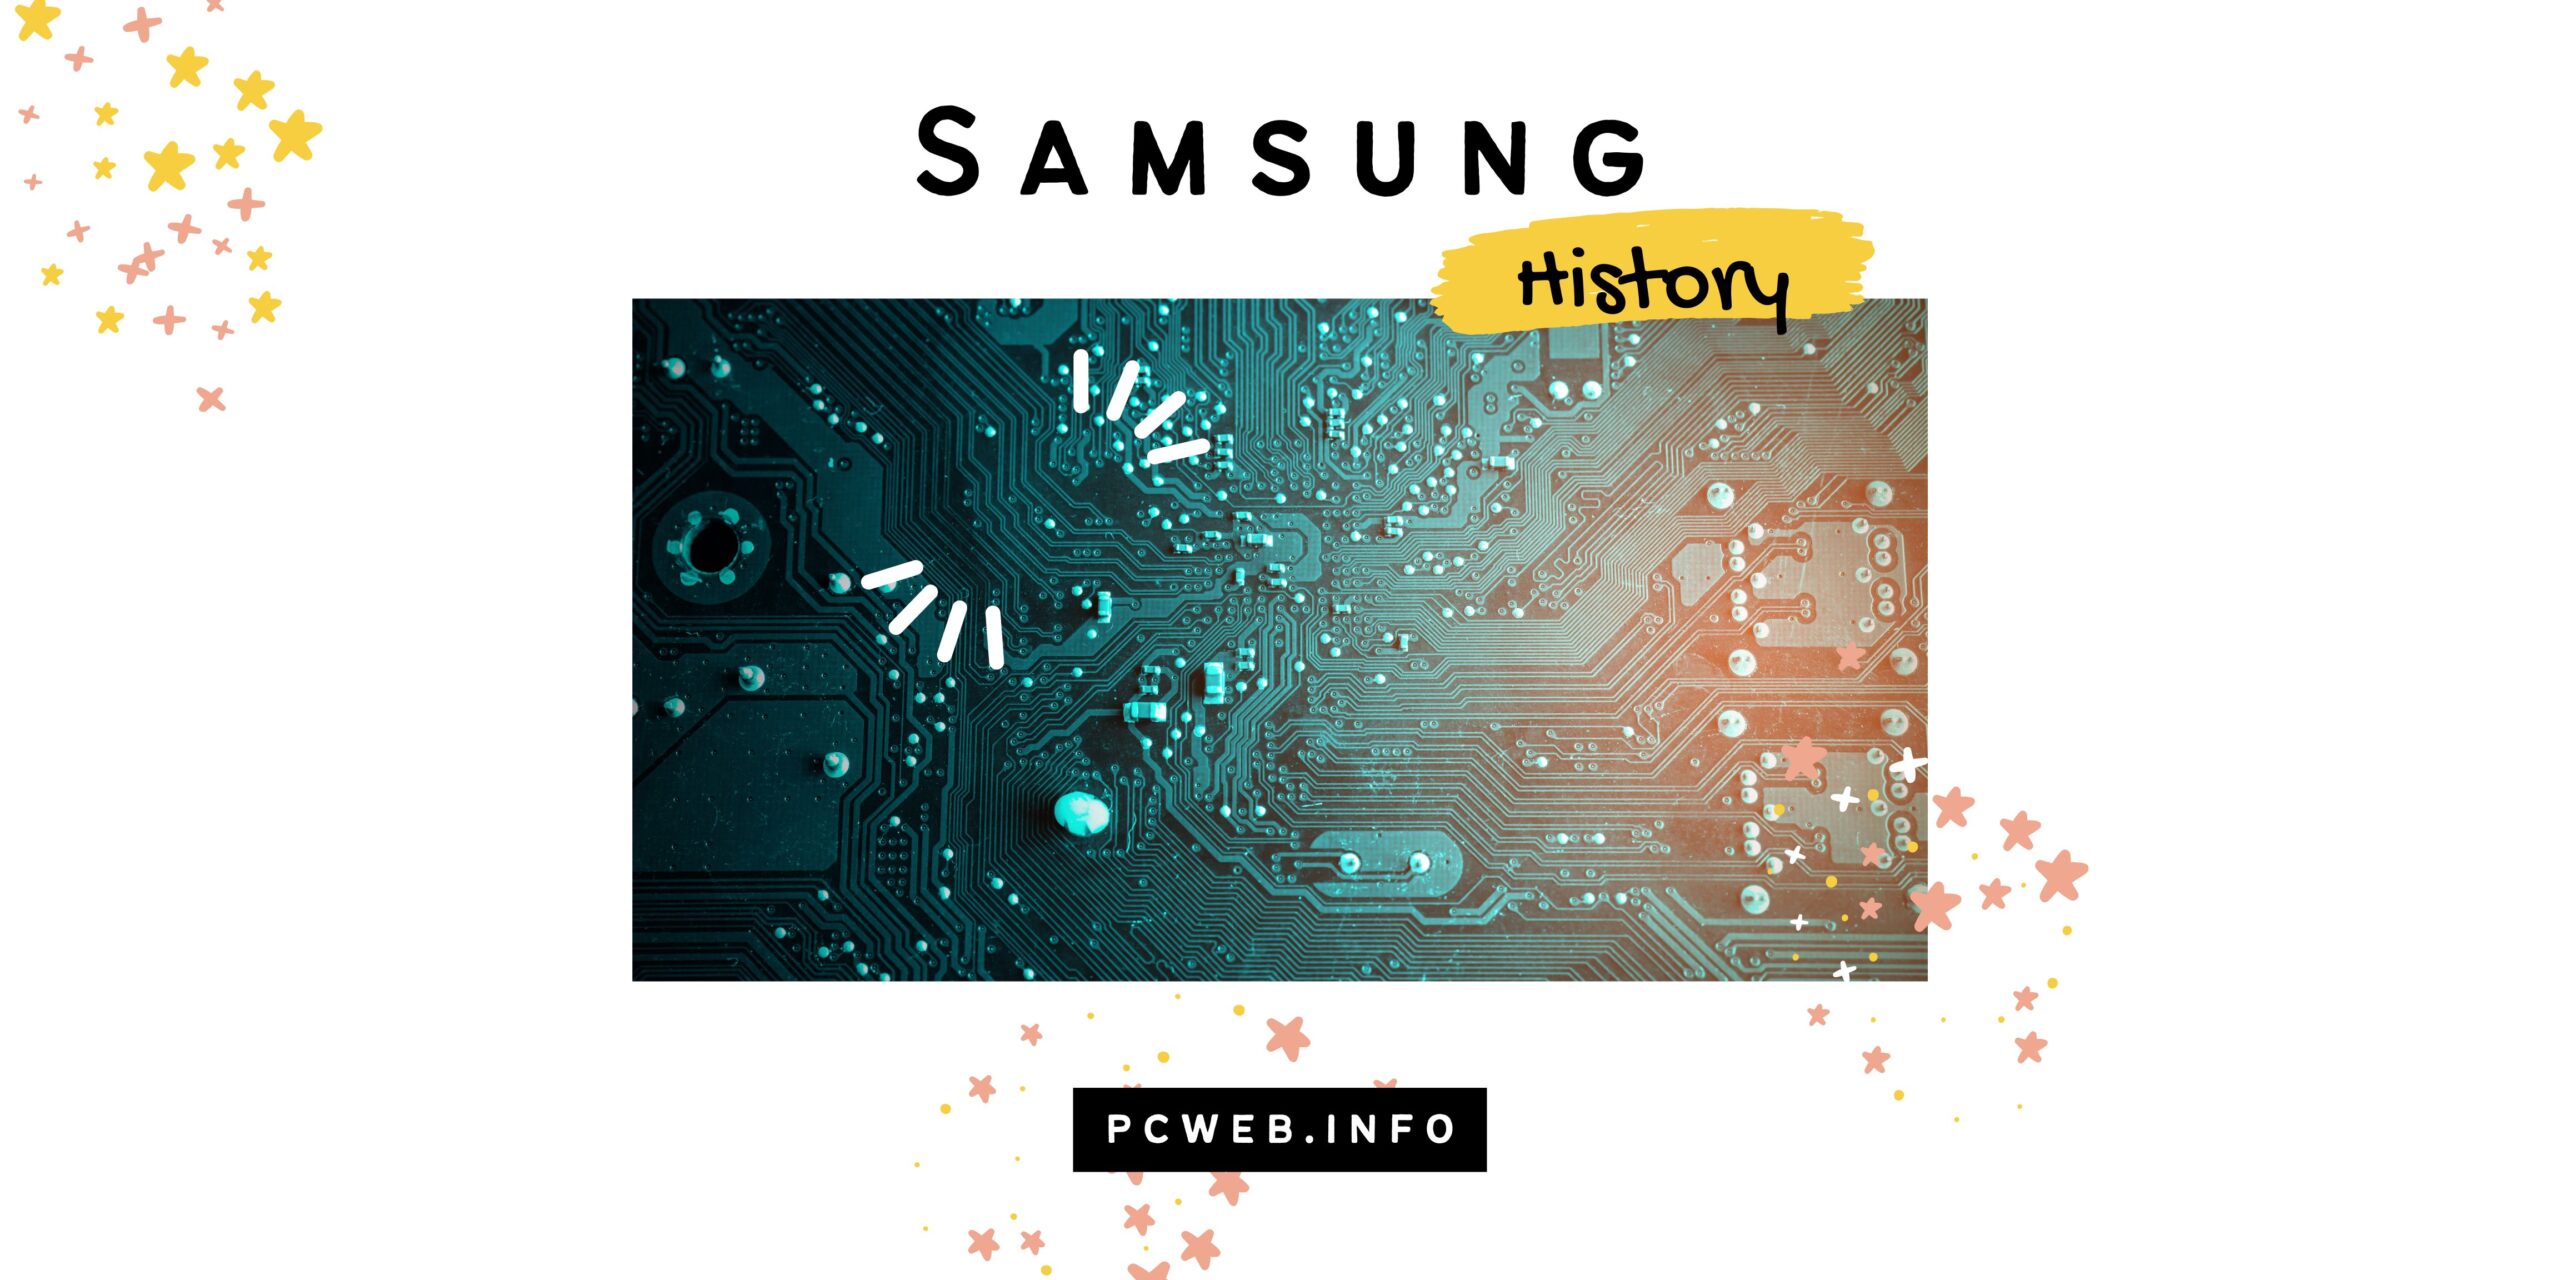 Samsung historia resumida